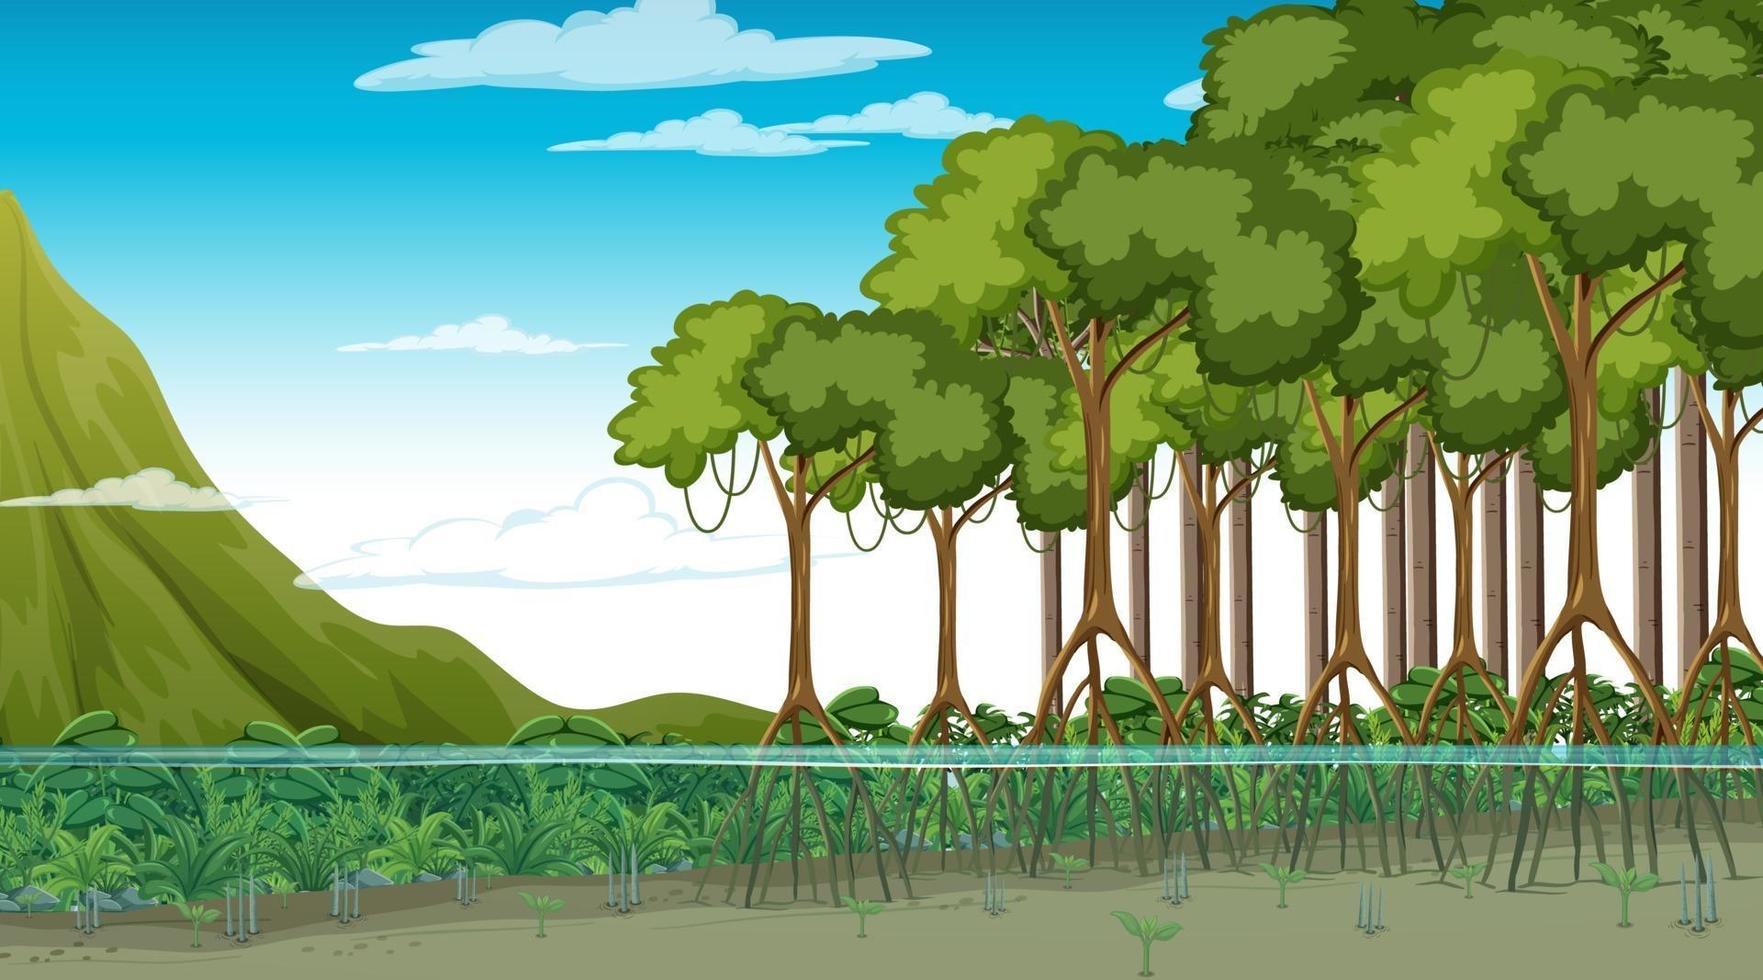 Naturszene mit Mangrovenwald tagsüber im Cartoon-Stil vektor